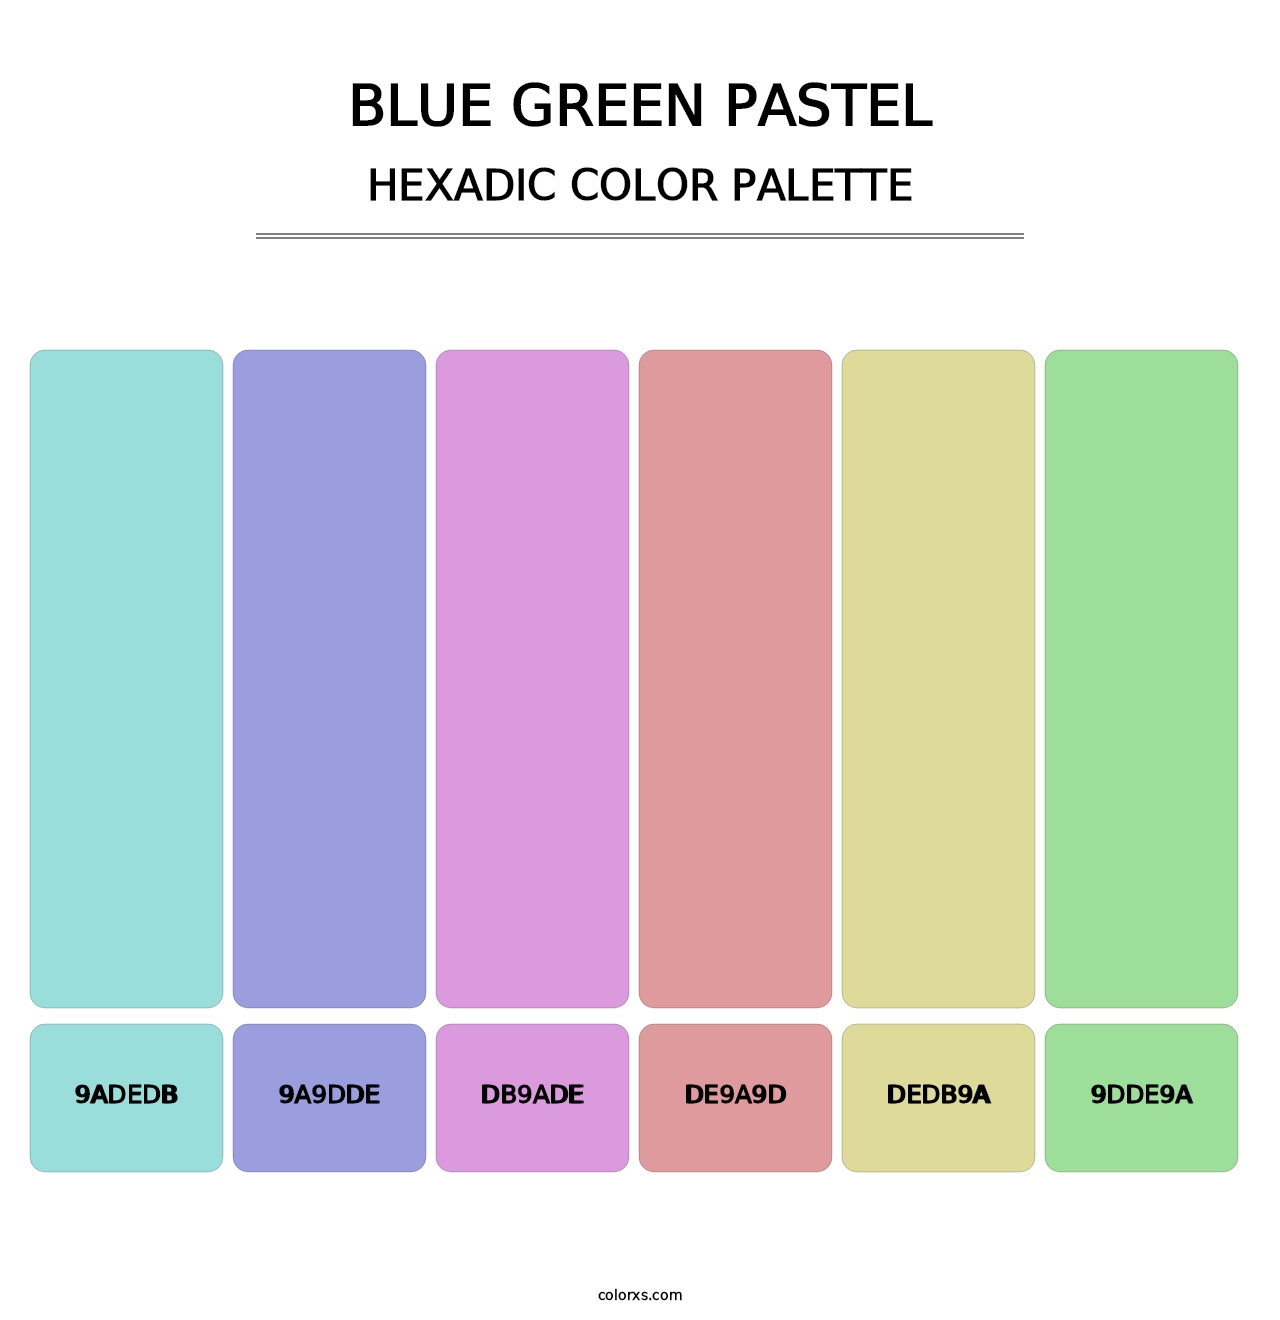 Blue Green Pastel - Hexadic Color Palette